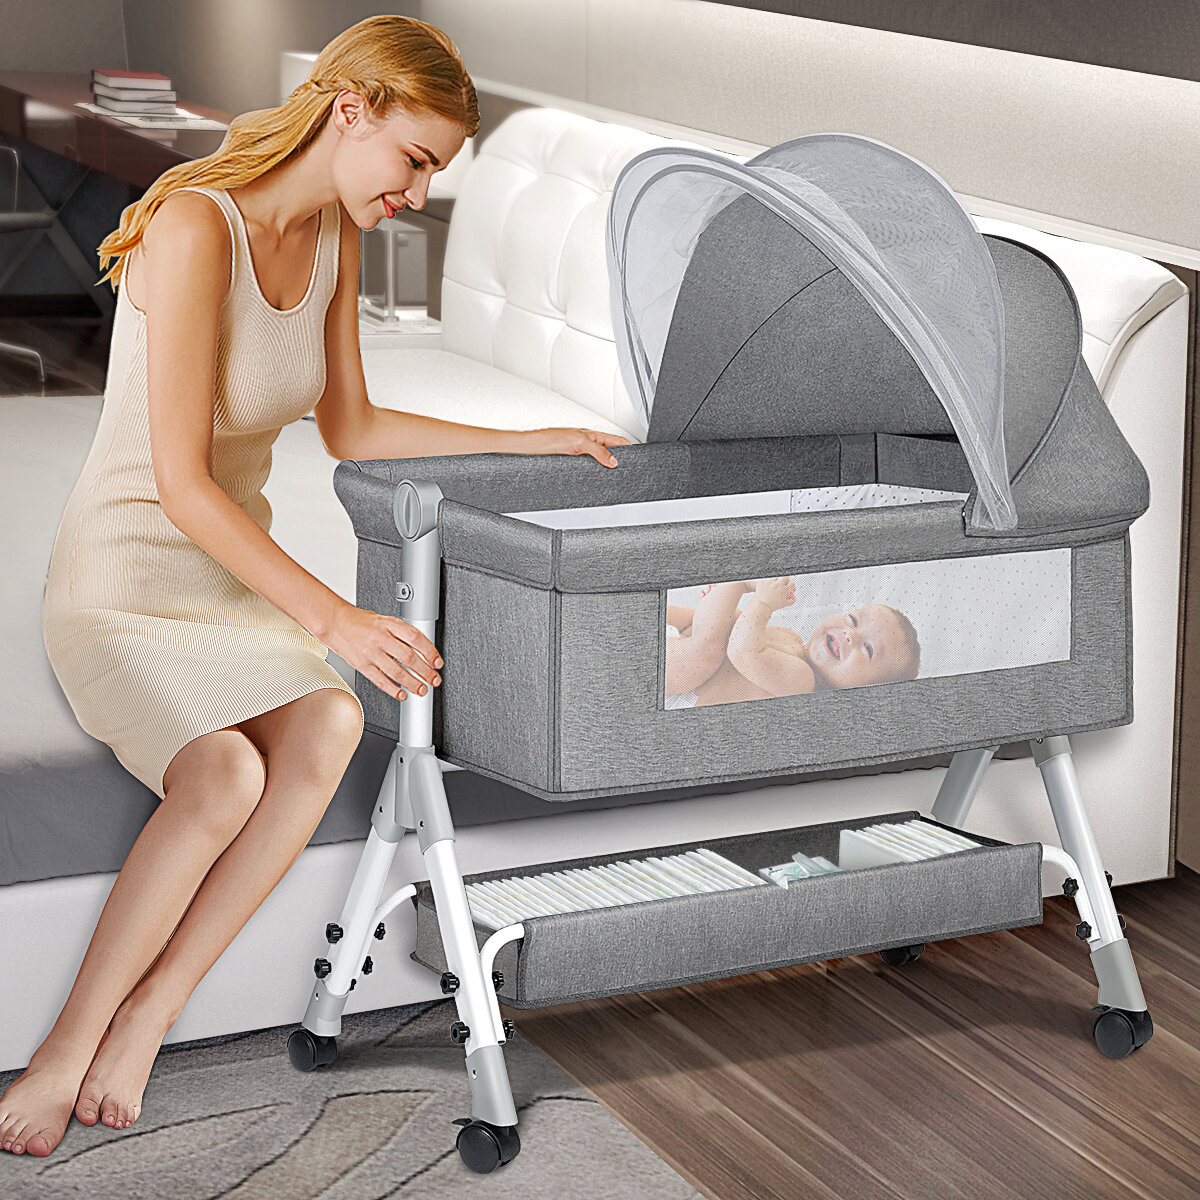 

Bassinet for Baby,Adjustable Baby Crib,Infant Cradle Bed with Diaper Storage Basket and Changing Station,Bedside Sleeper